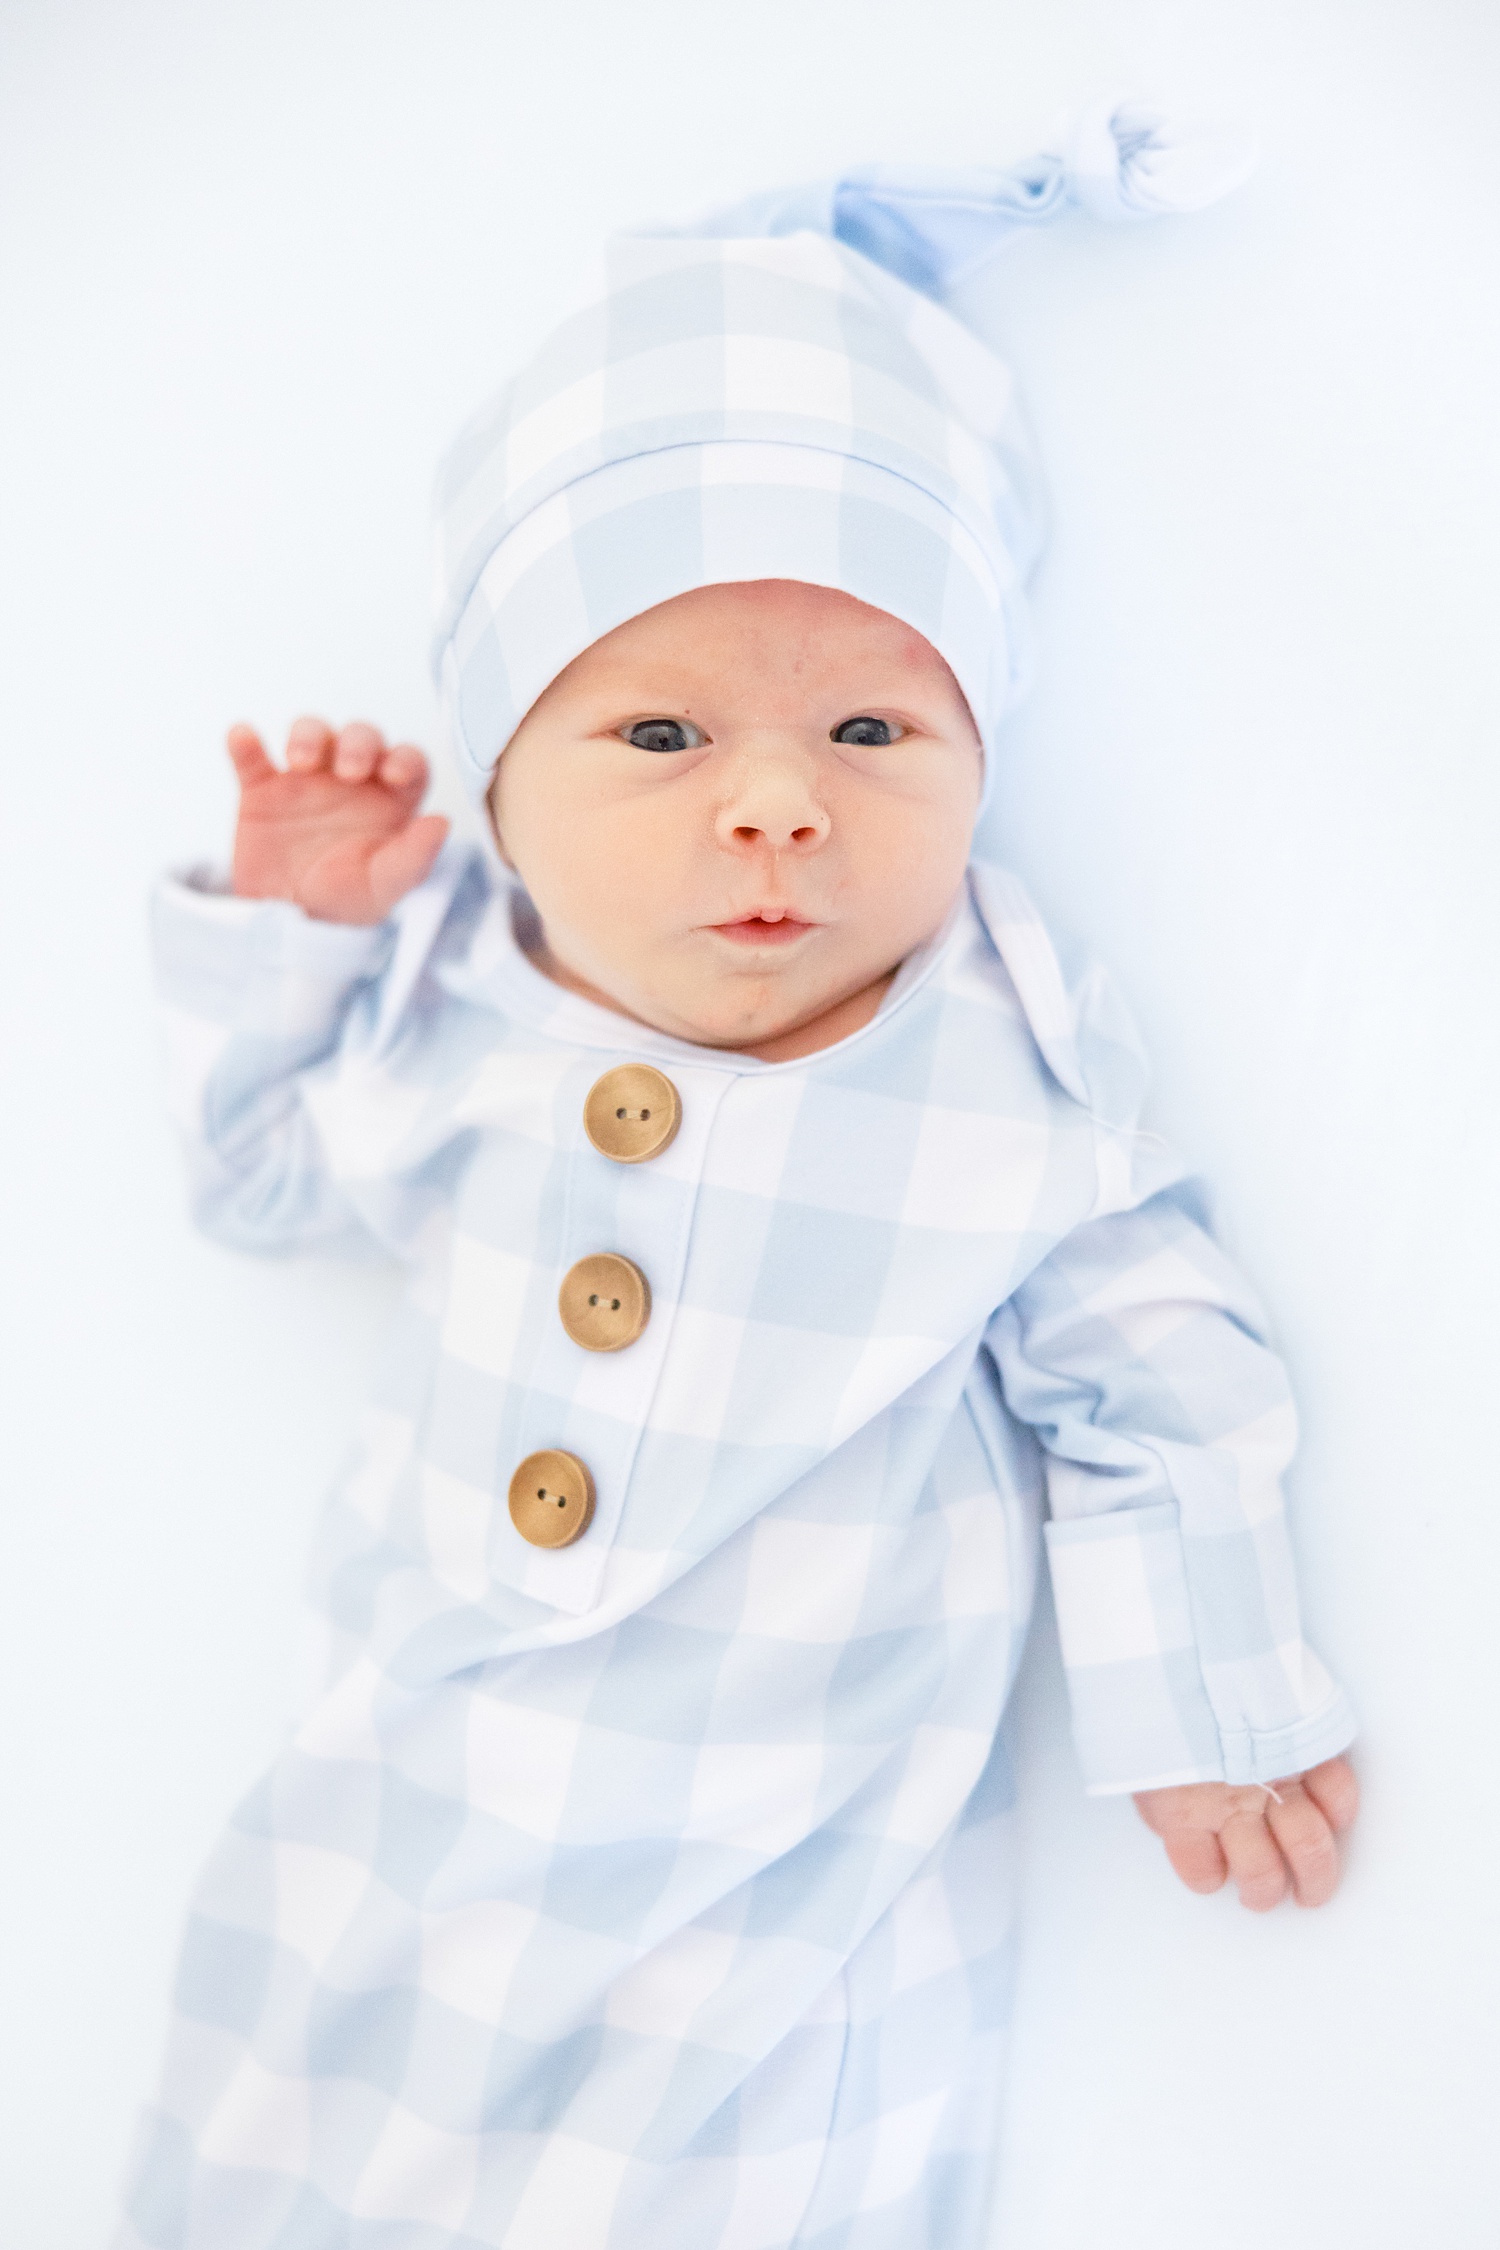 wide awake newborn in blue checkered outfit